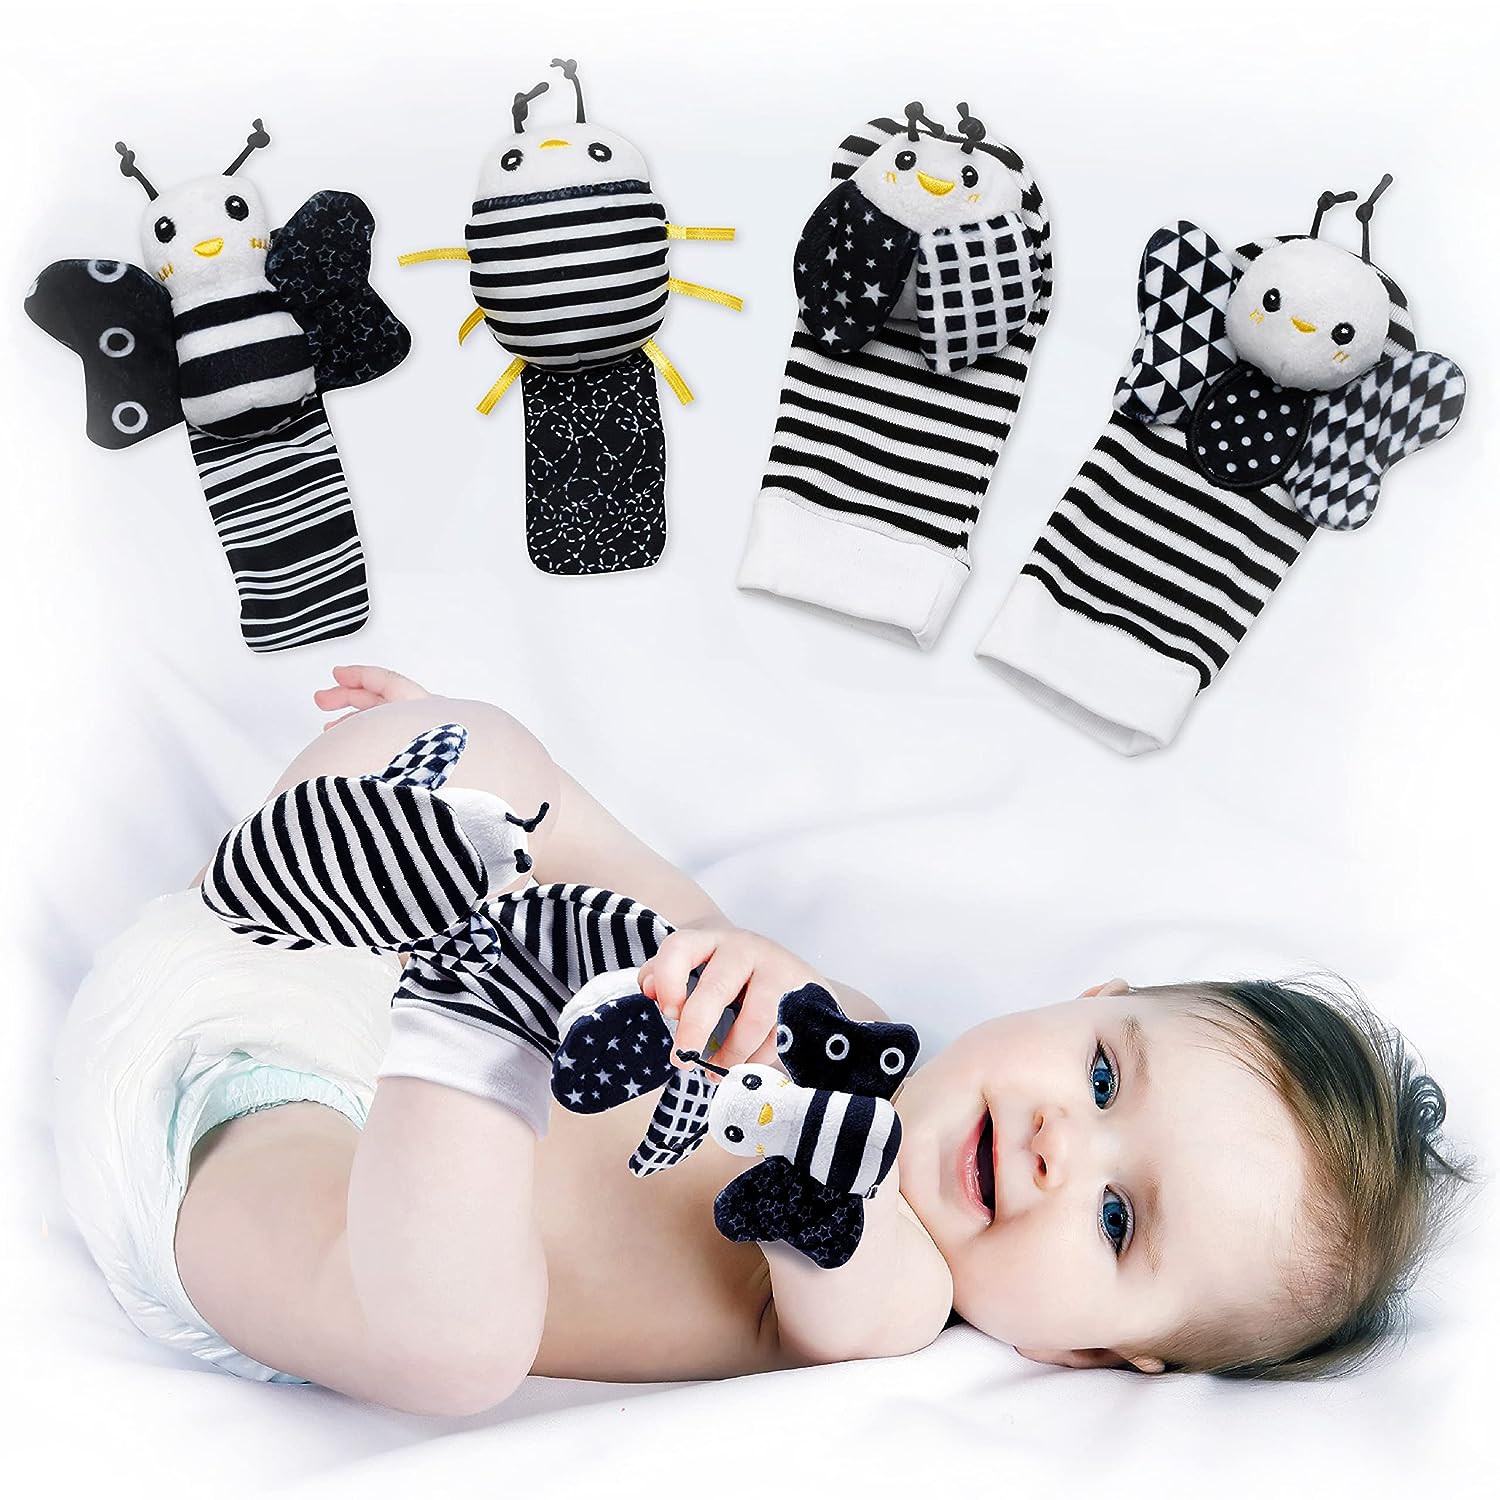 SSK Soft Baby Wrist Rattle Foot Finder Socks Set,Cotton and Plush Stuffed  Infant Toys,Birthday Holiday Birth Present for Newborn Boy Girl